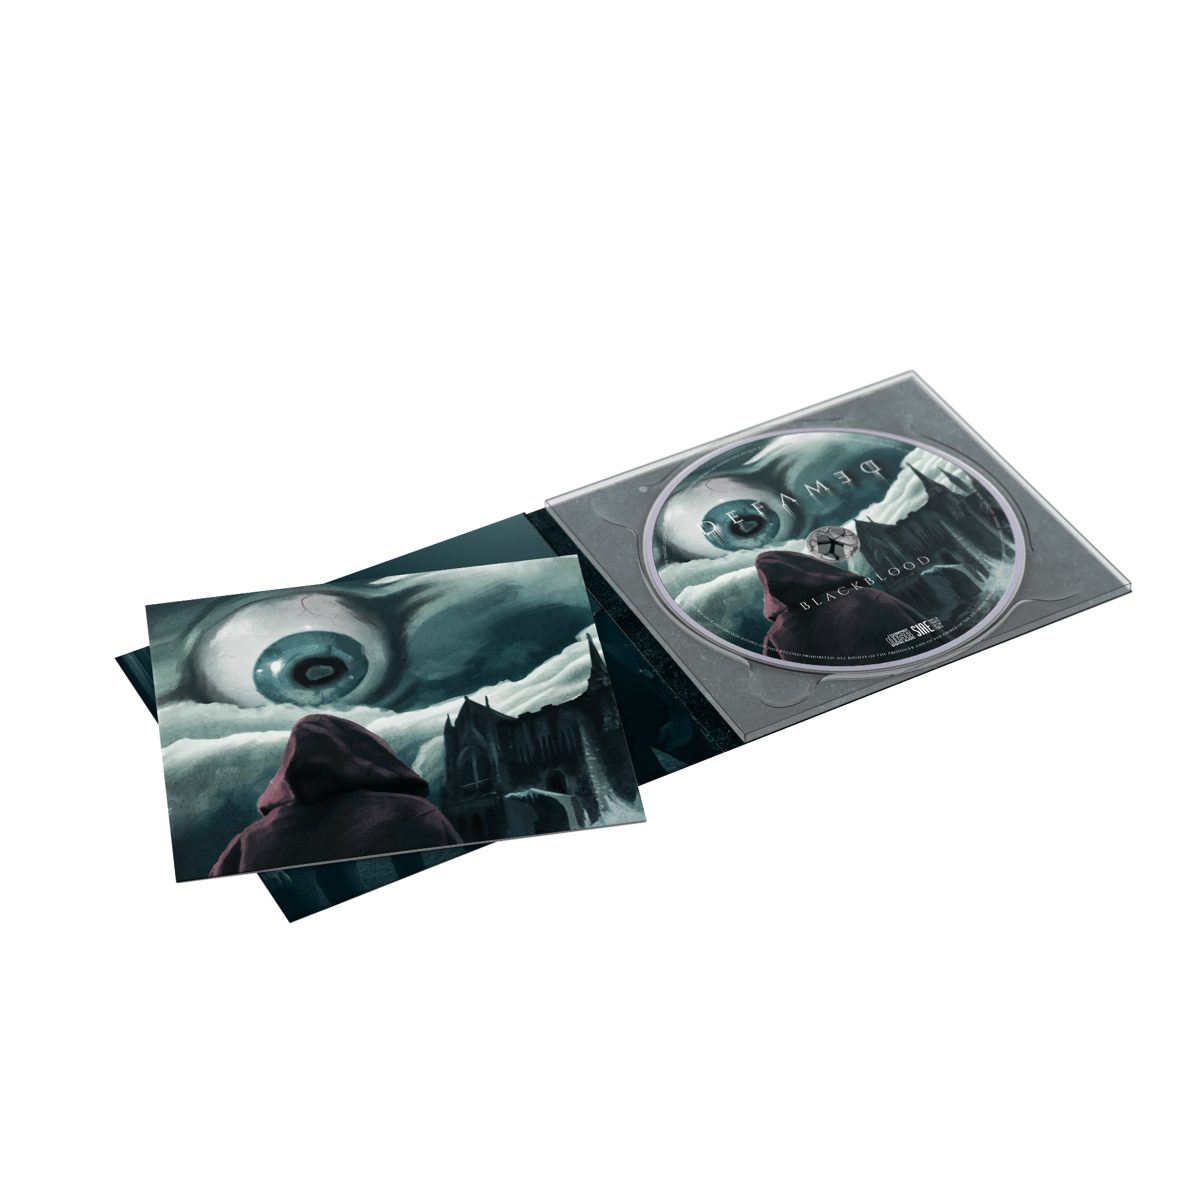 Image of “BLACKBLOOD” CD (Physical CD)